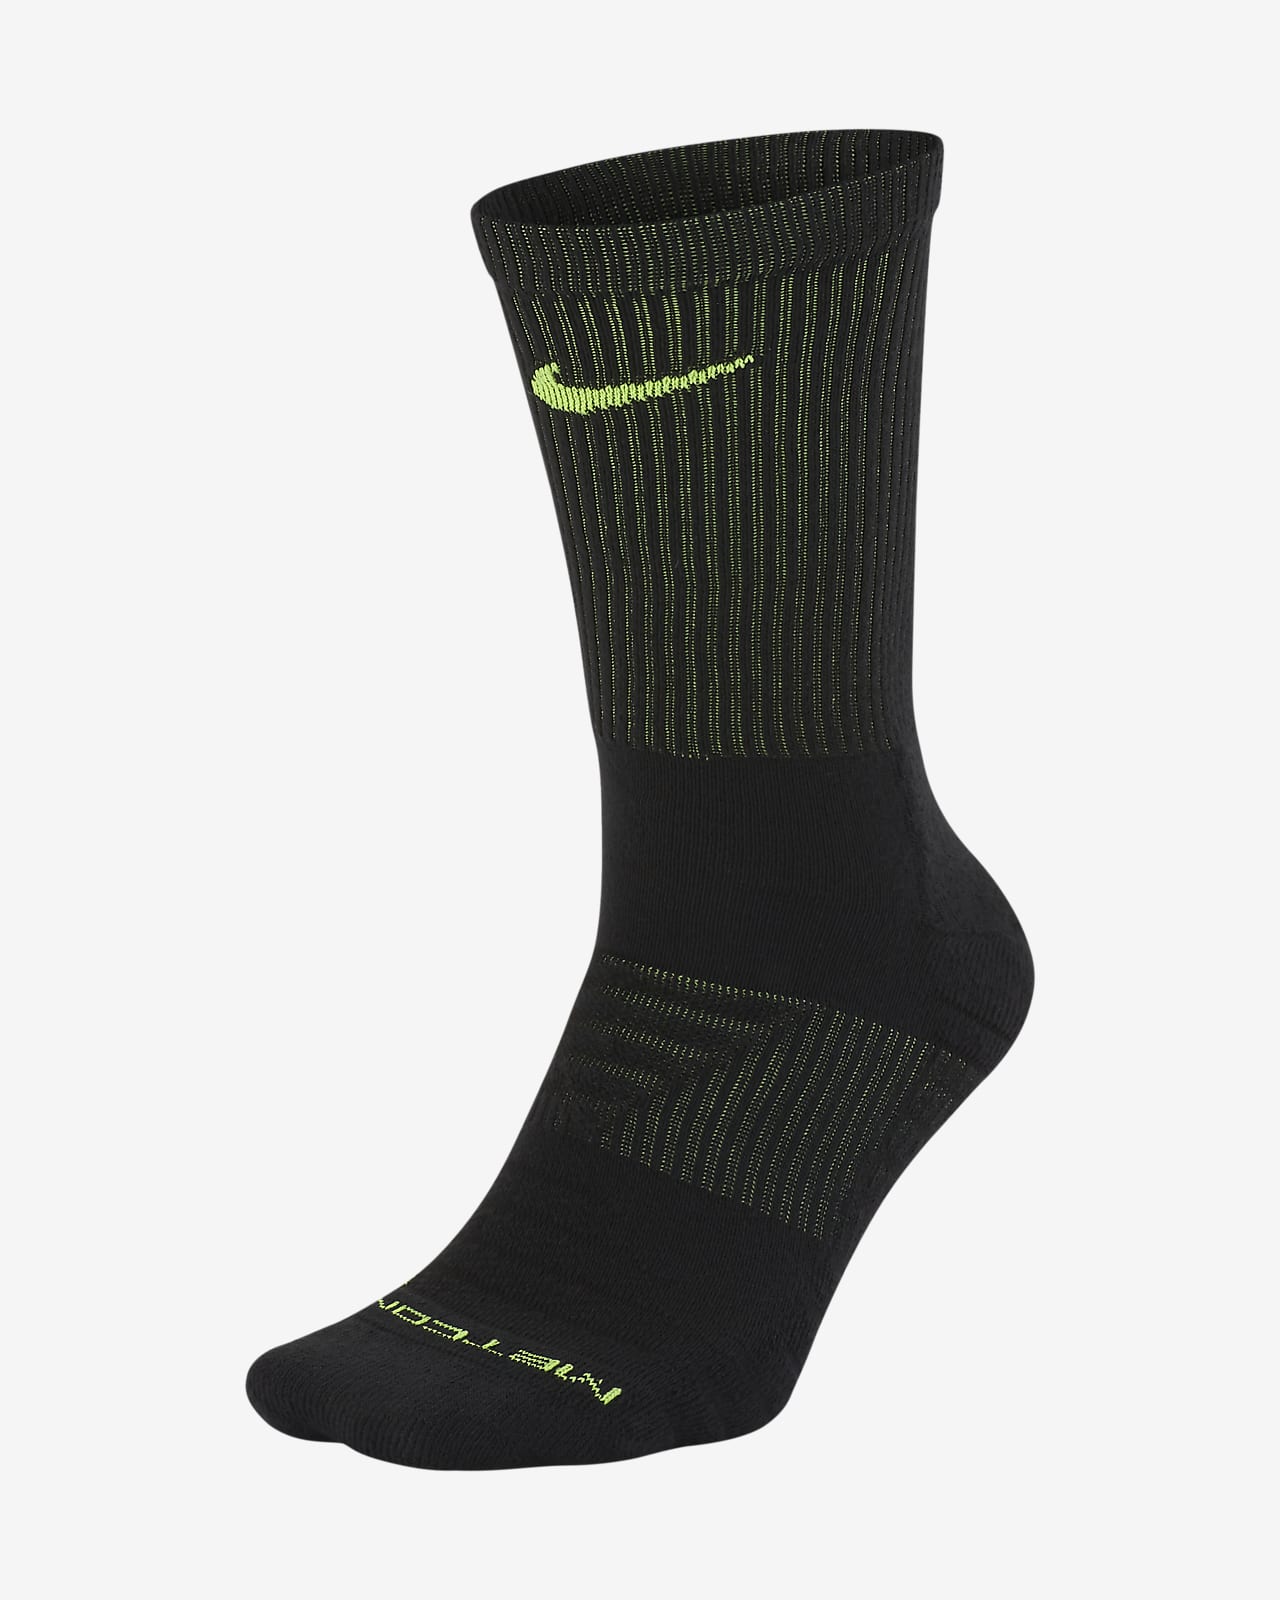 Nike Everyday Metcon Training Crew Socks. IL